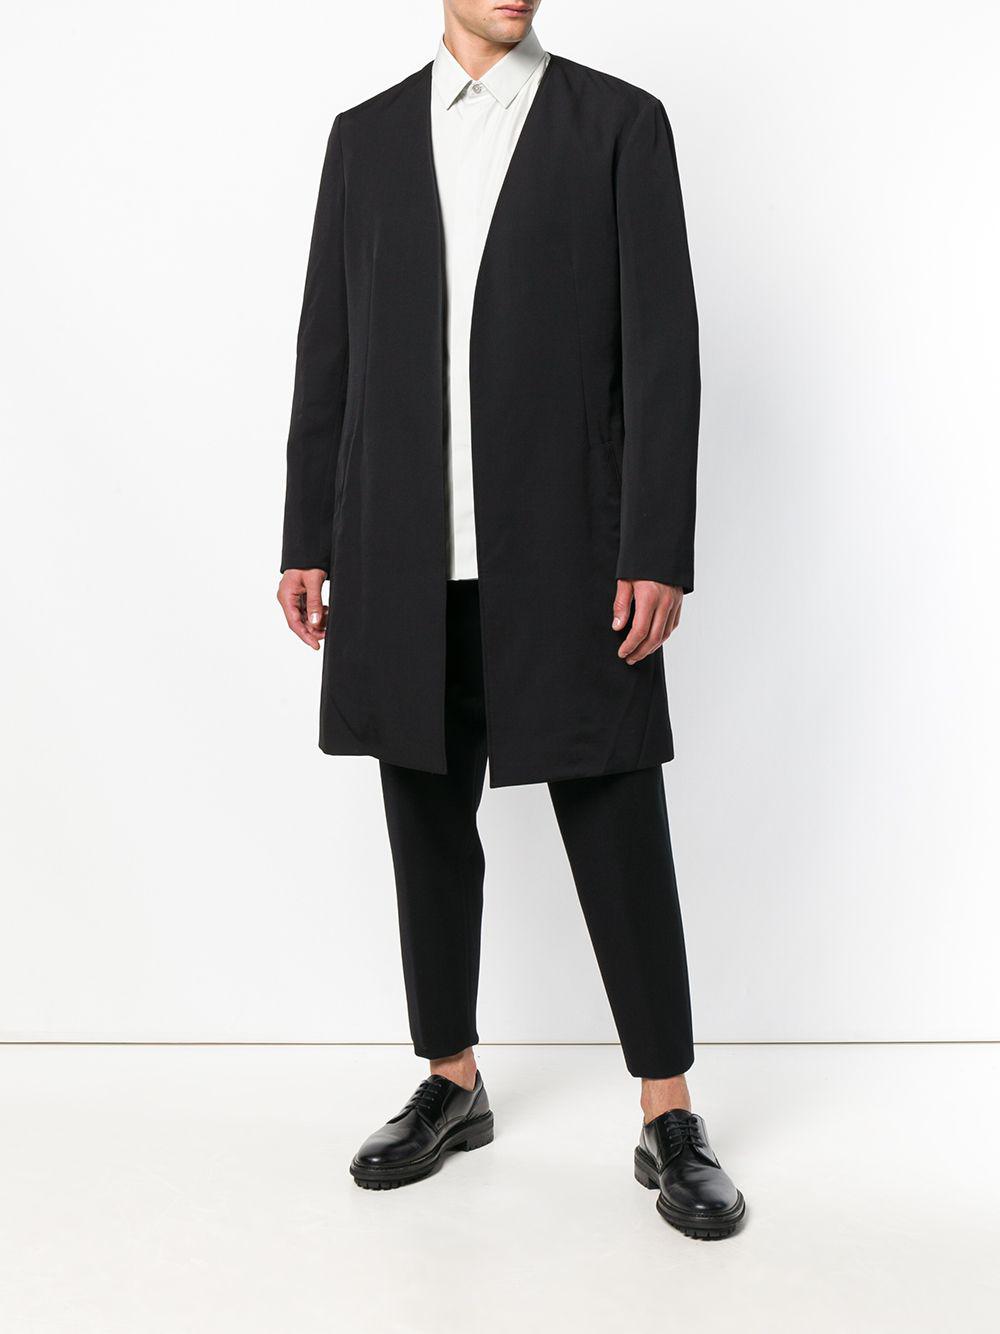 Yohji Yamamoto Wool Collarless Coat in Black for Men | Lyst